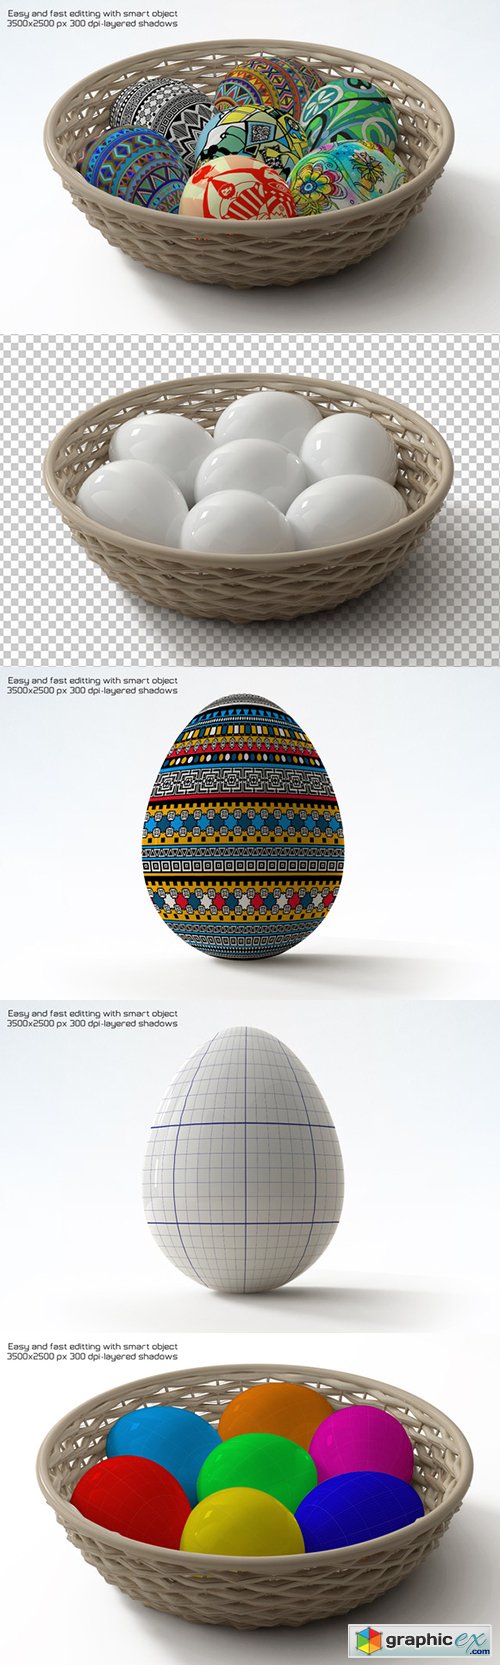  Easter Eggs Mock-up